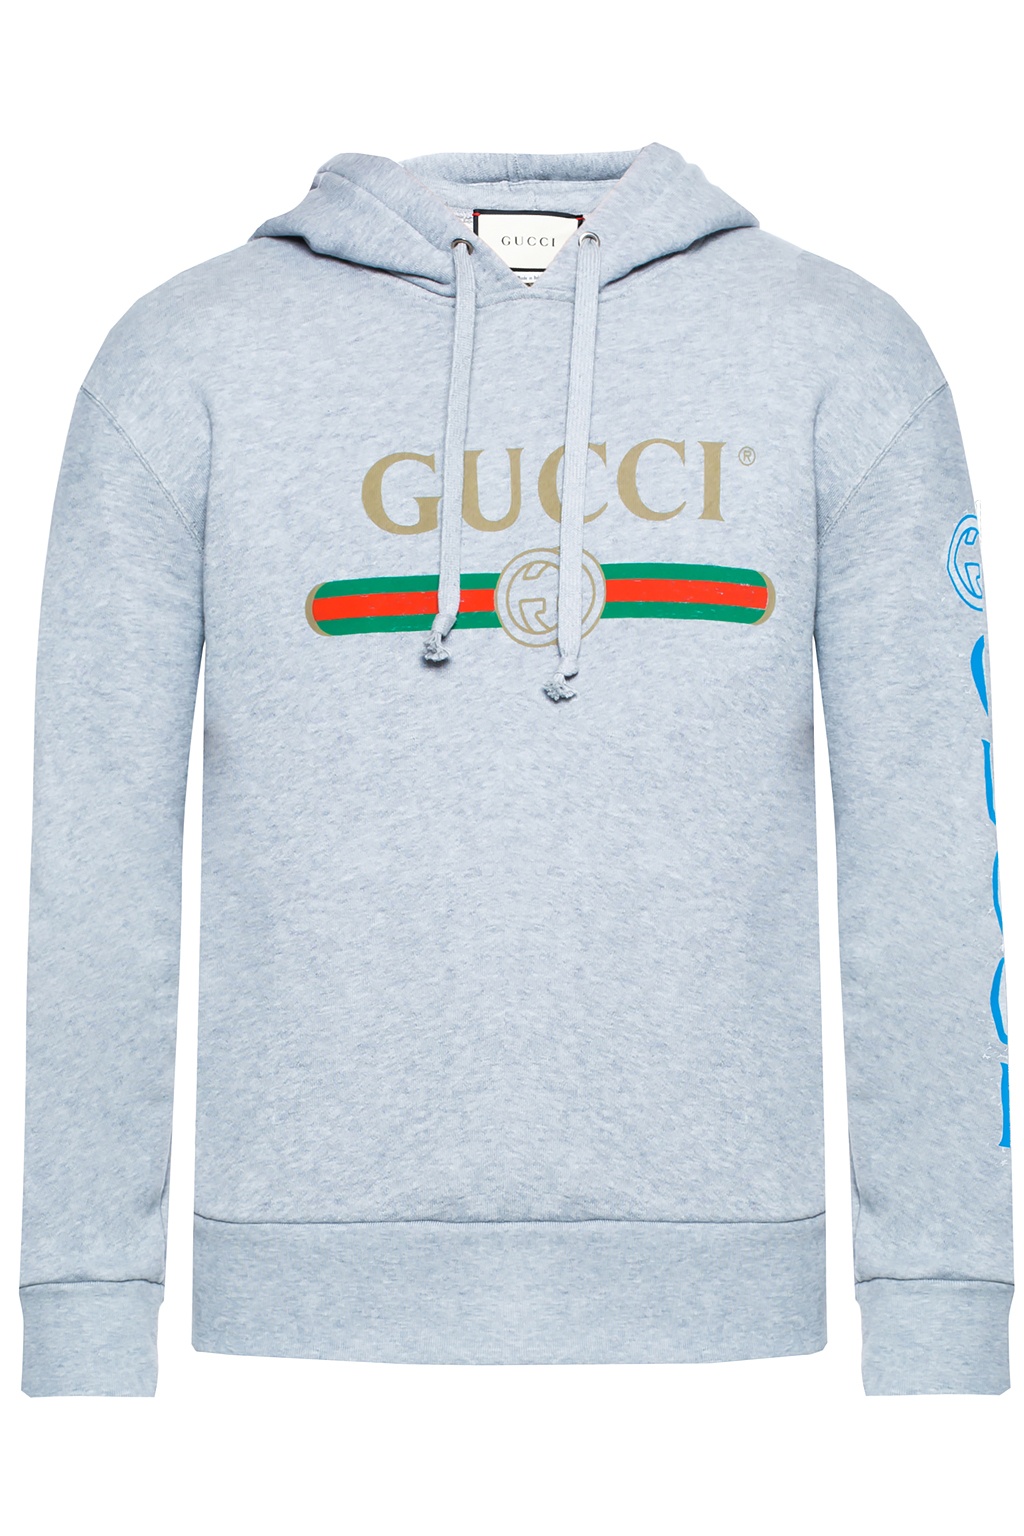 Gucci Hooded sweatshirt with logo | Men's | Vitkac